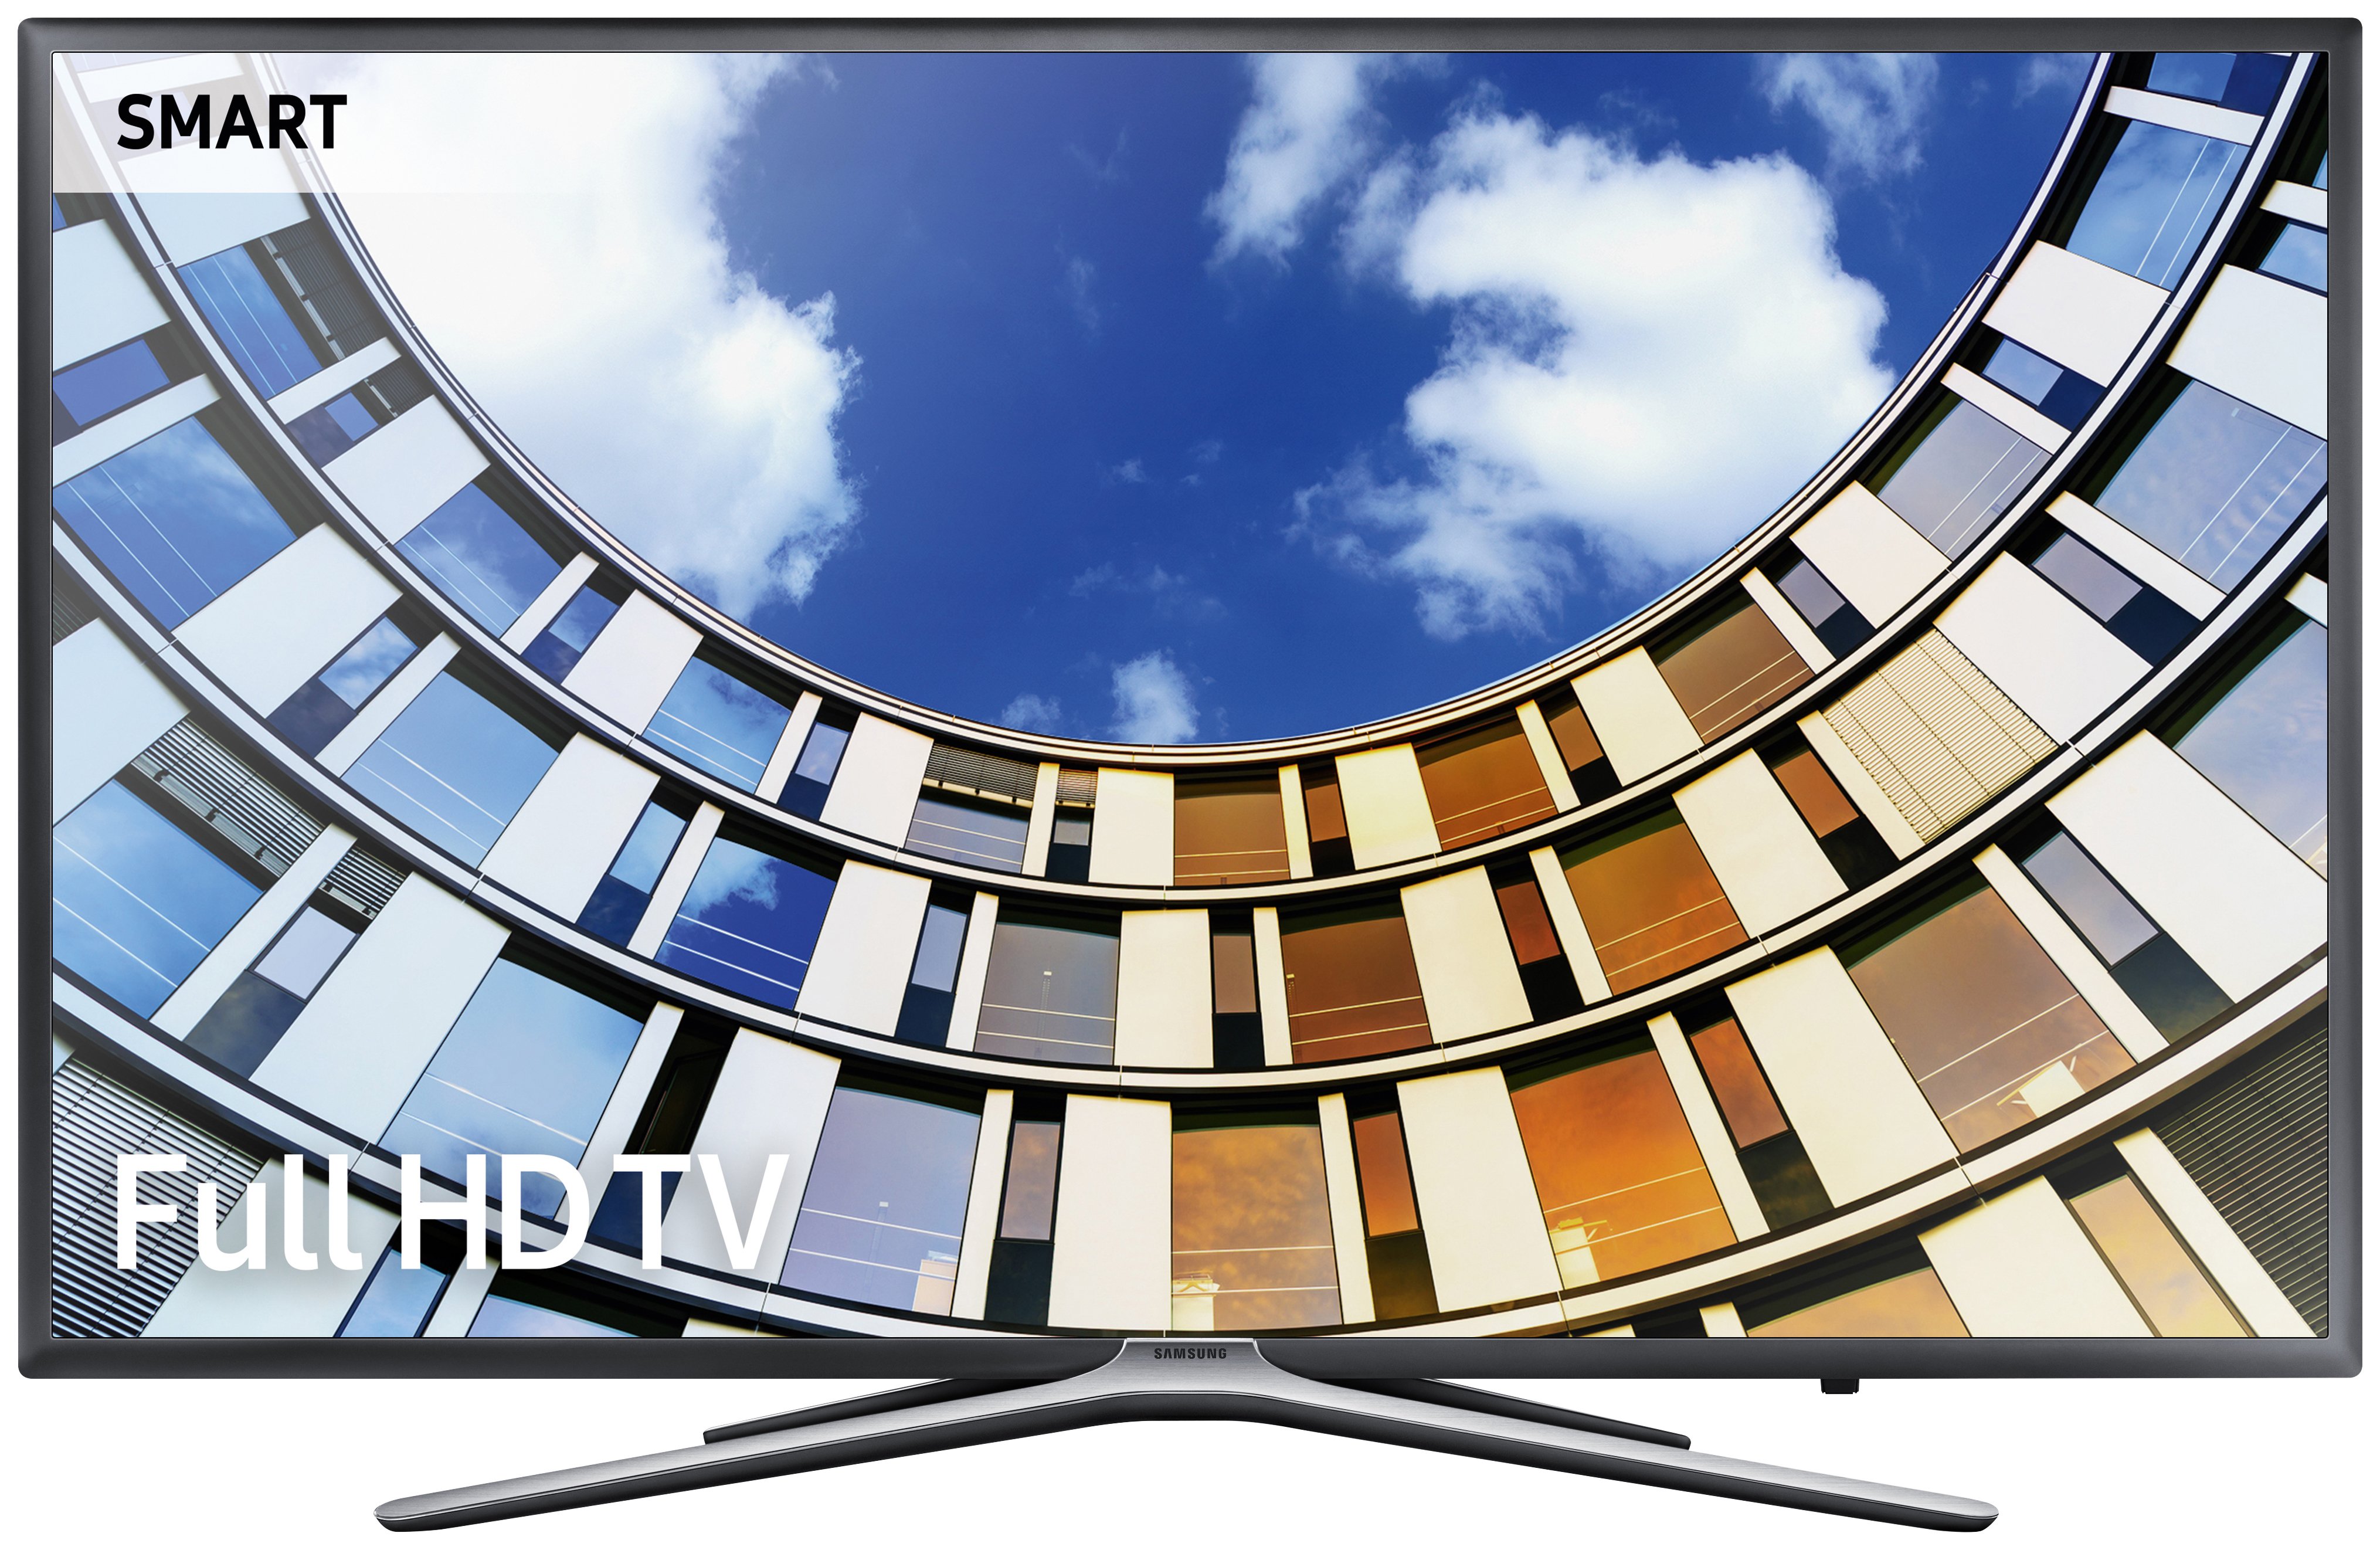 Samsung 49M5520 49 Inch Smart Full HD TV (6874539) | Argos Price ...